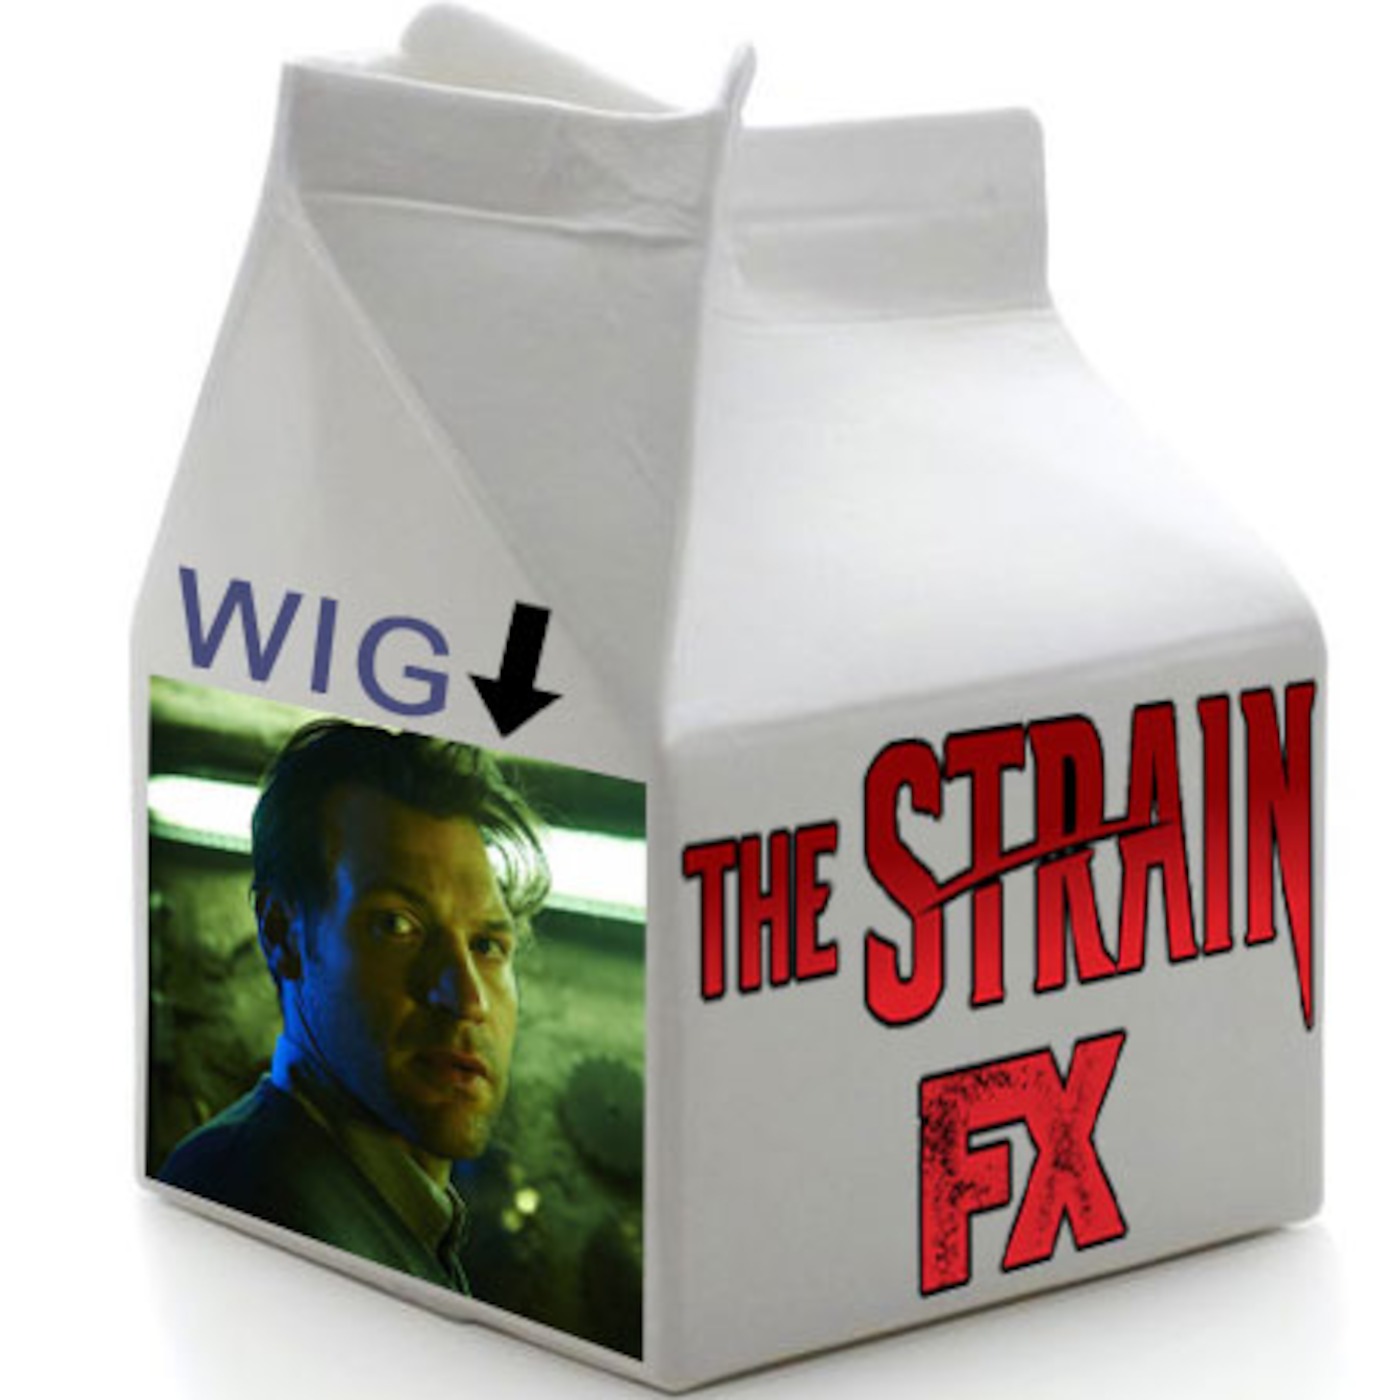 The Strain: Season 4, Episode 3: ”One Shot”